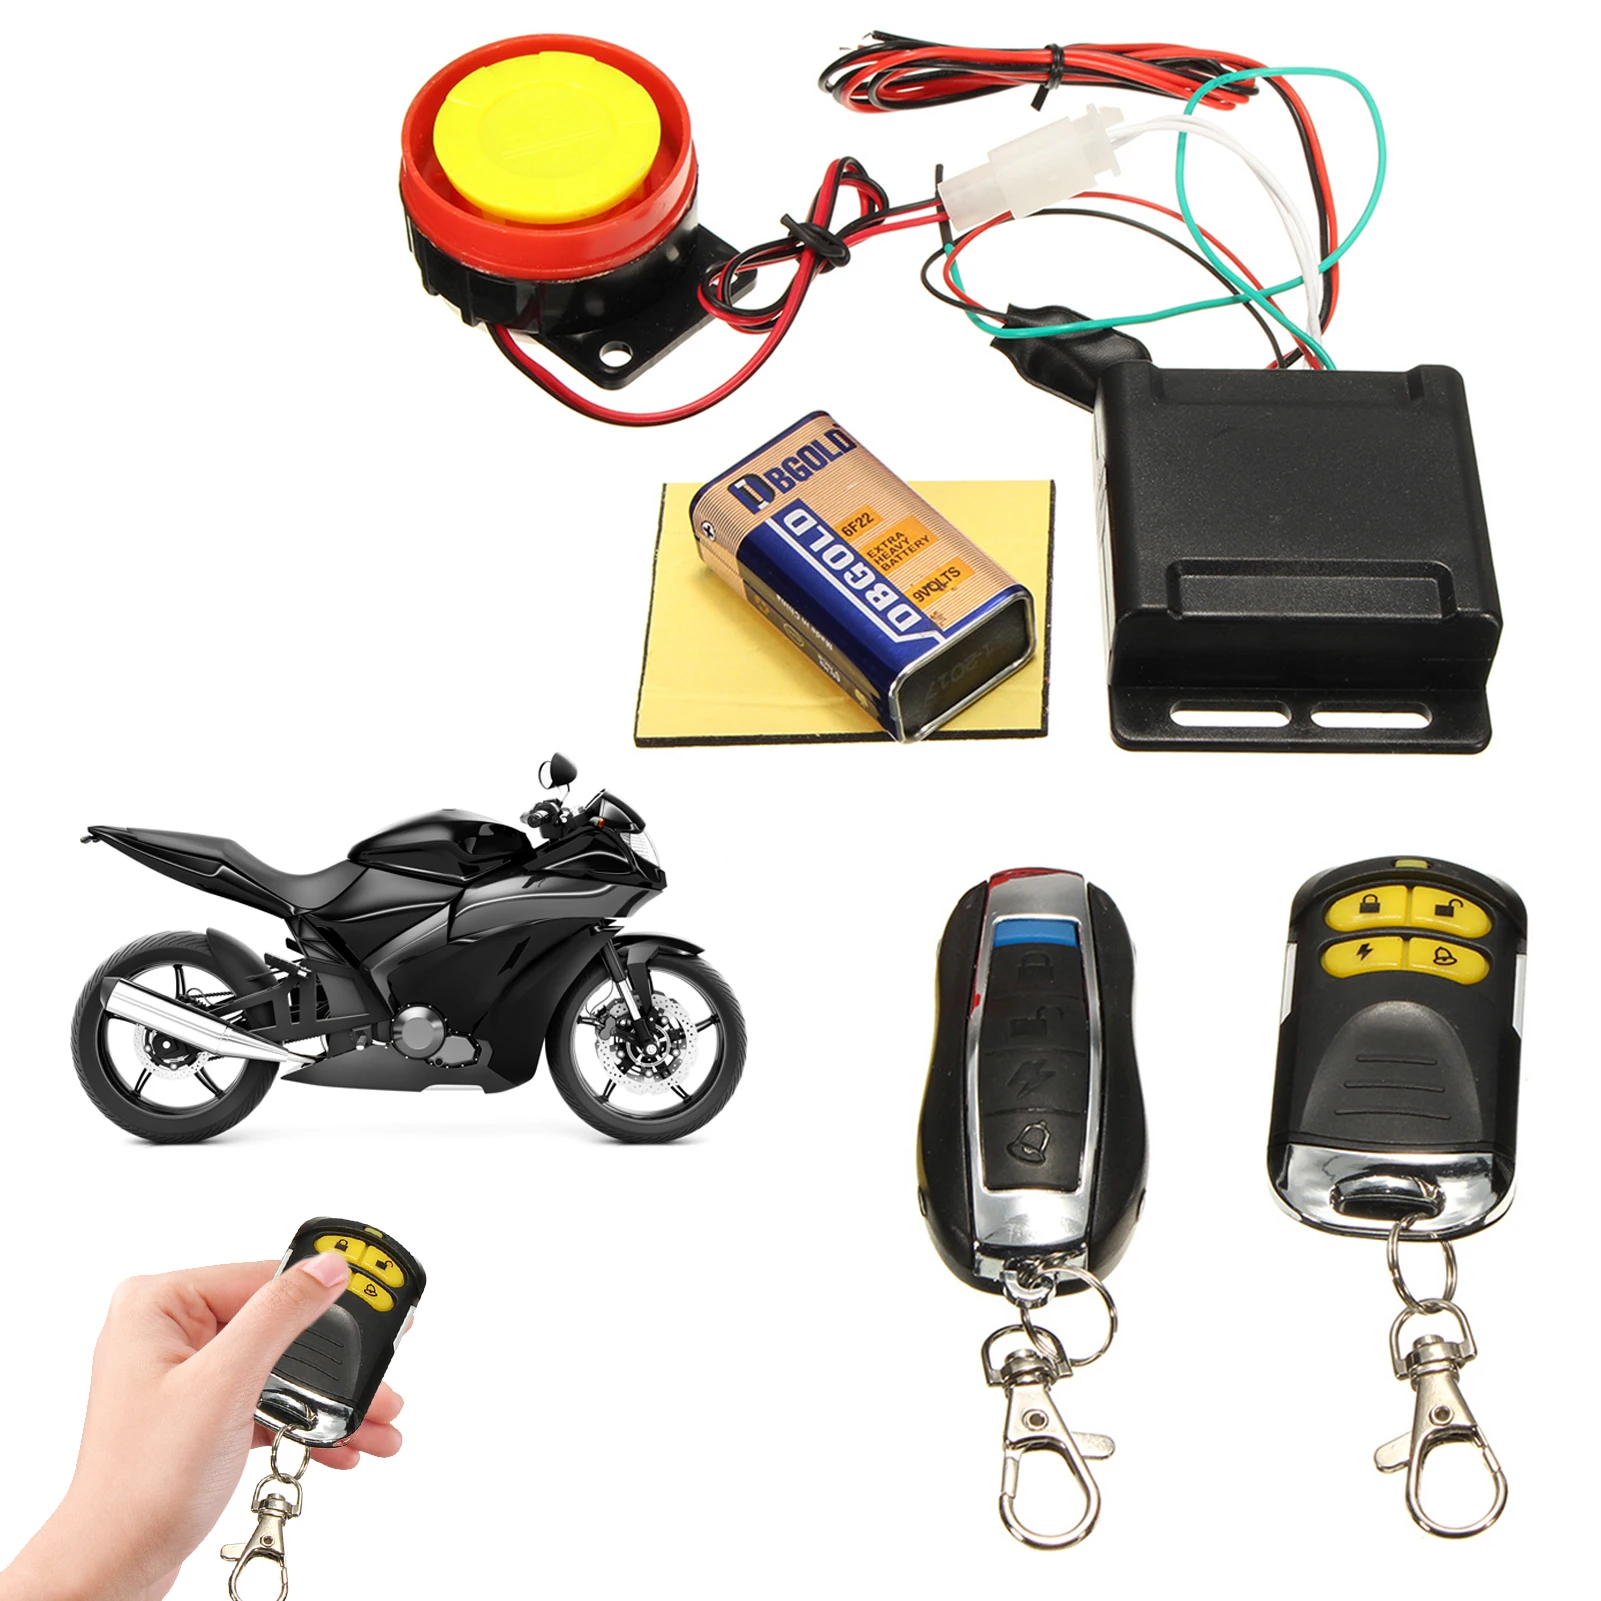 

Motorcycle Anti Theft Alarm High Power Siren Security Alarm System 125dB Remote Control Horn Alarm Warner Adjustable Sensitivity